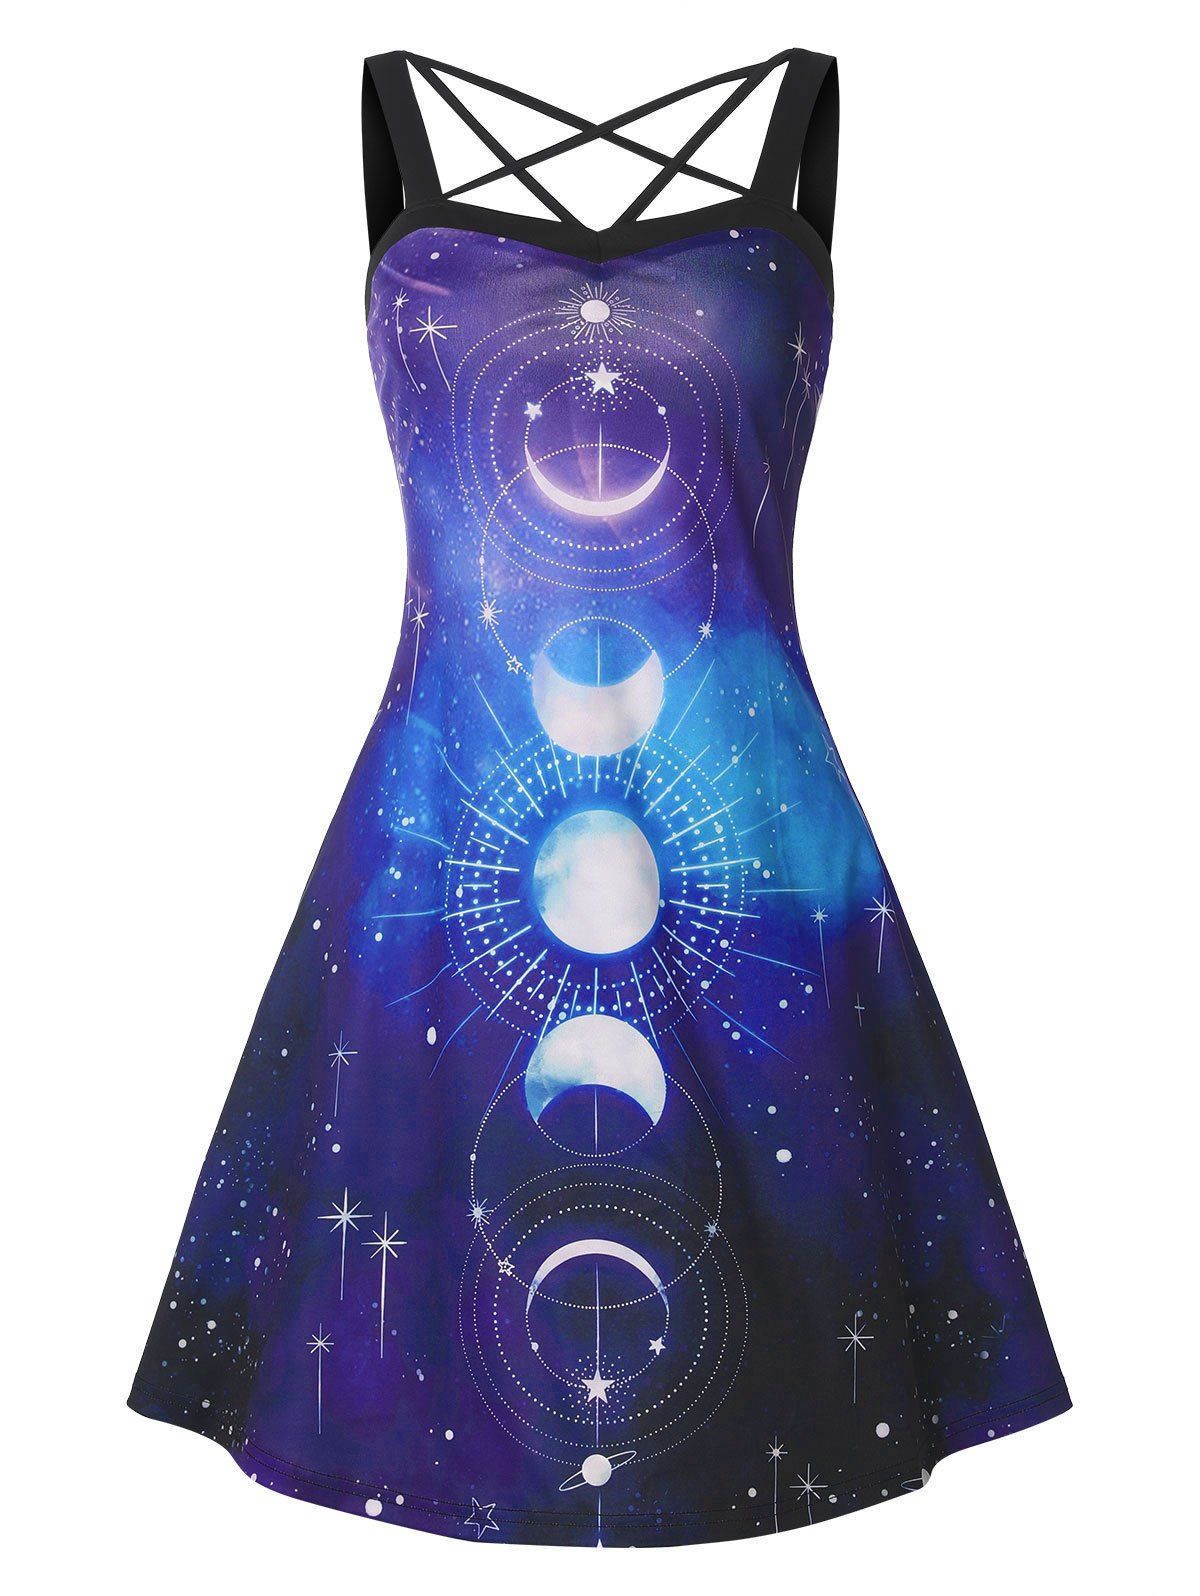 Moon Phase Galaxy Print Crisscross Dress - multicolor S